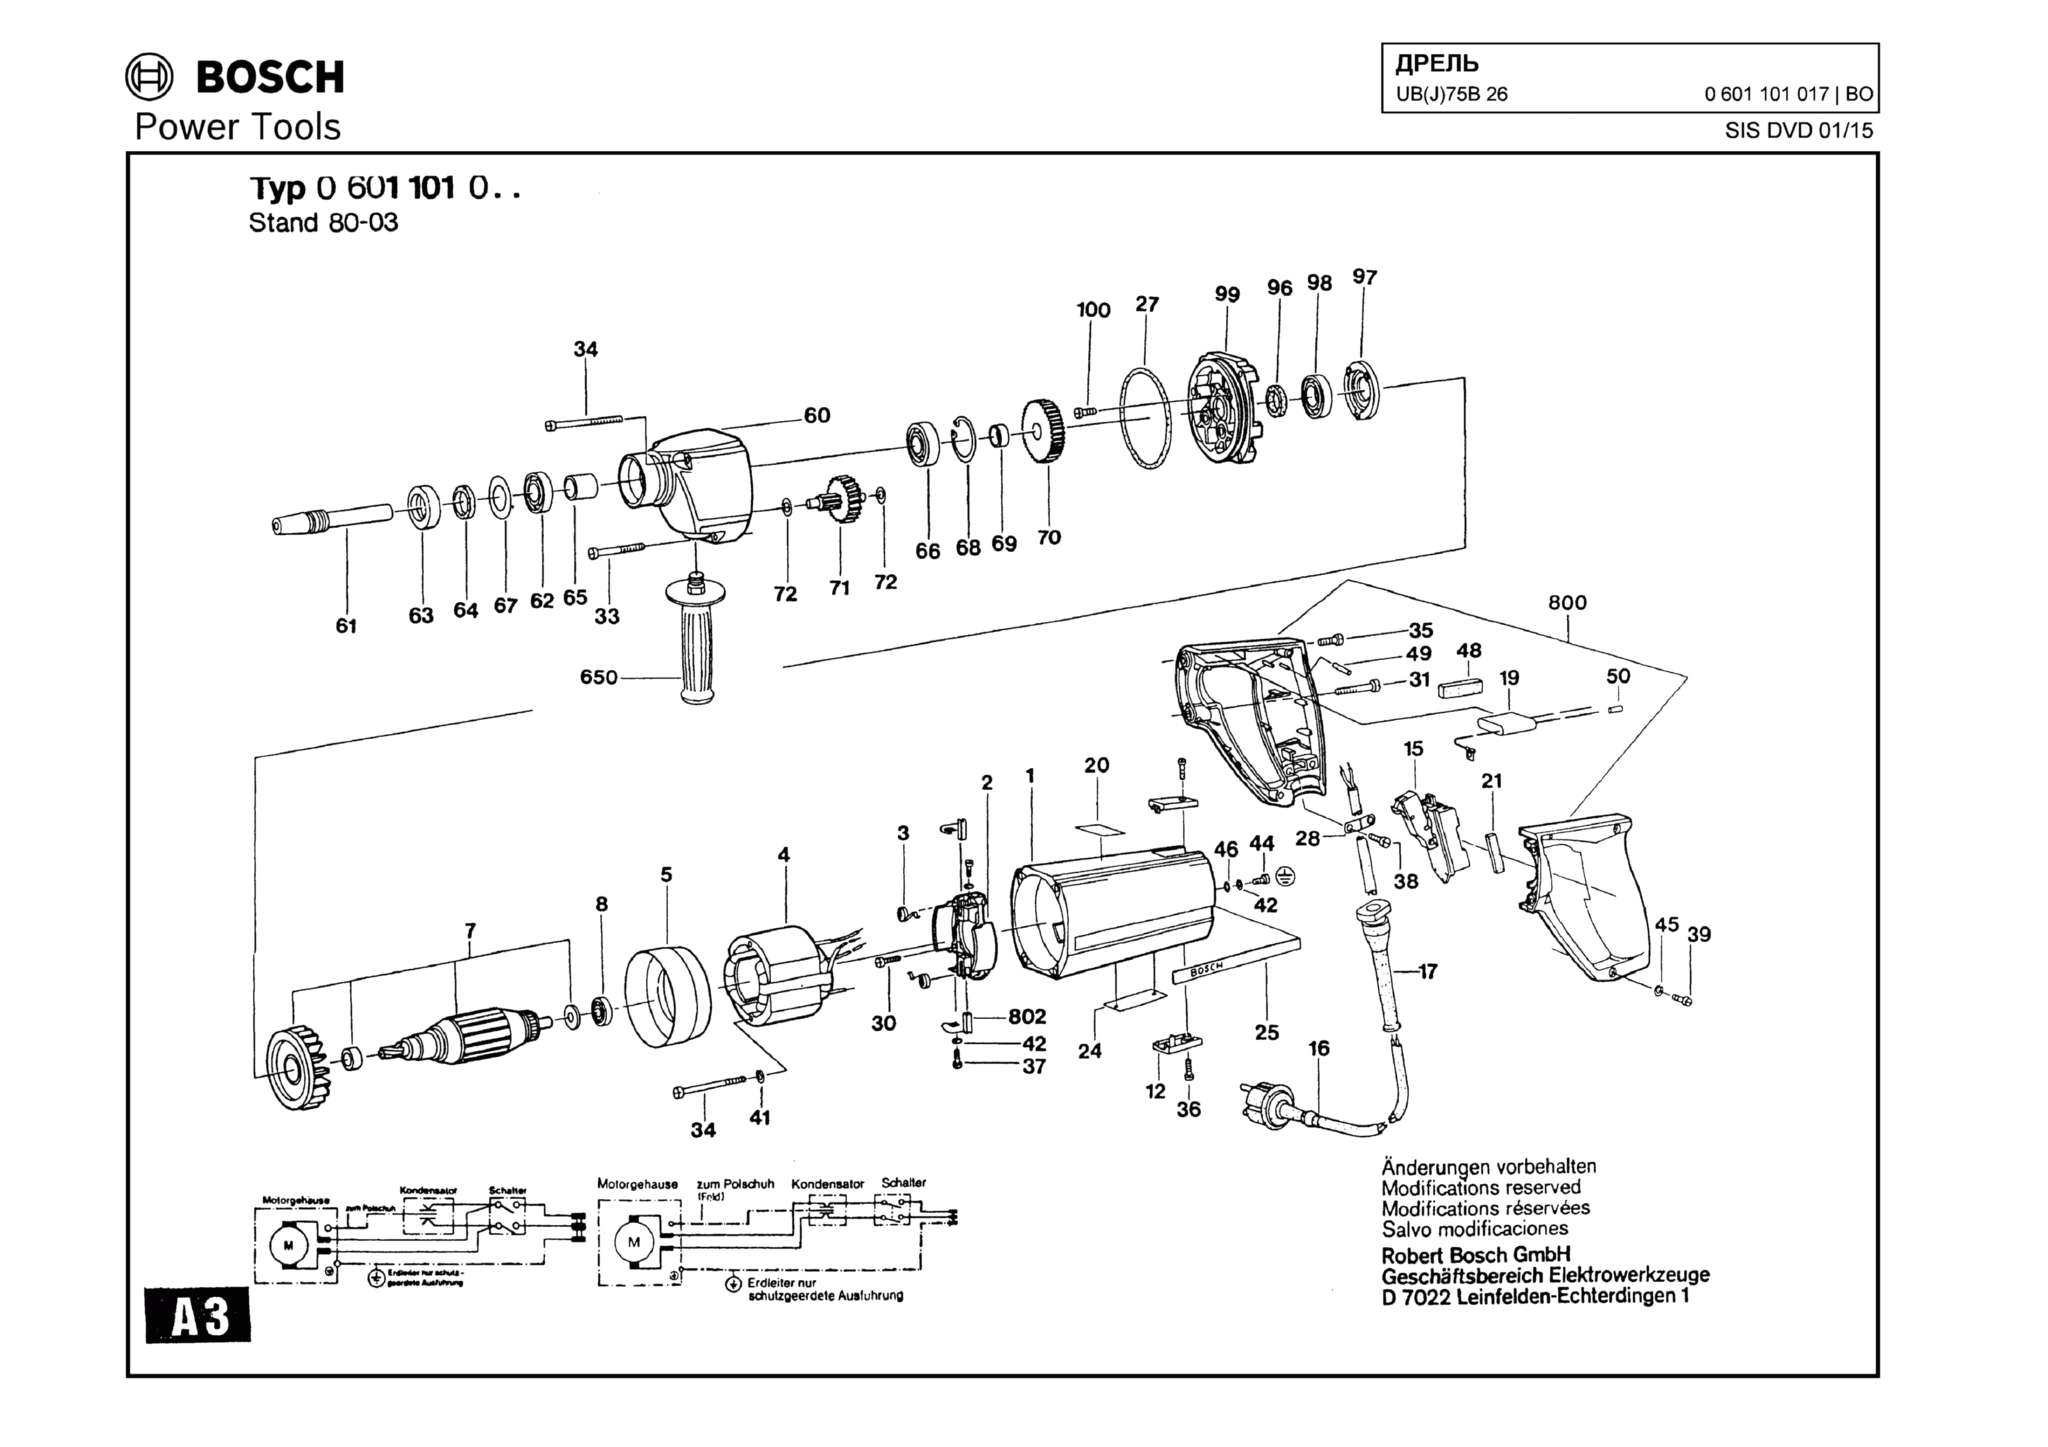 Запчасти, схема и деталировка Bosch UB(J)75B 26 (ТИП 0601101017)